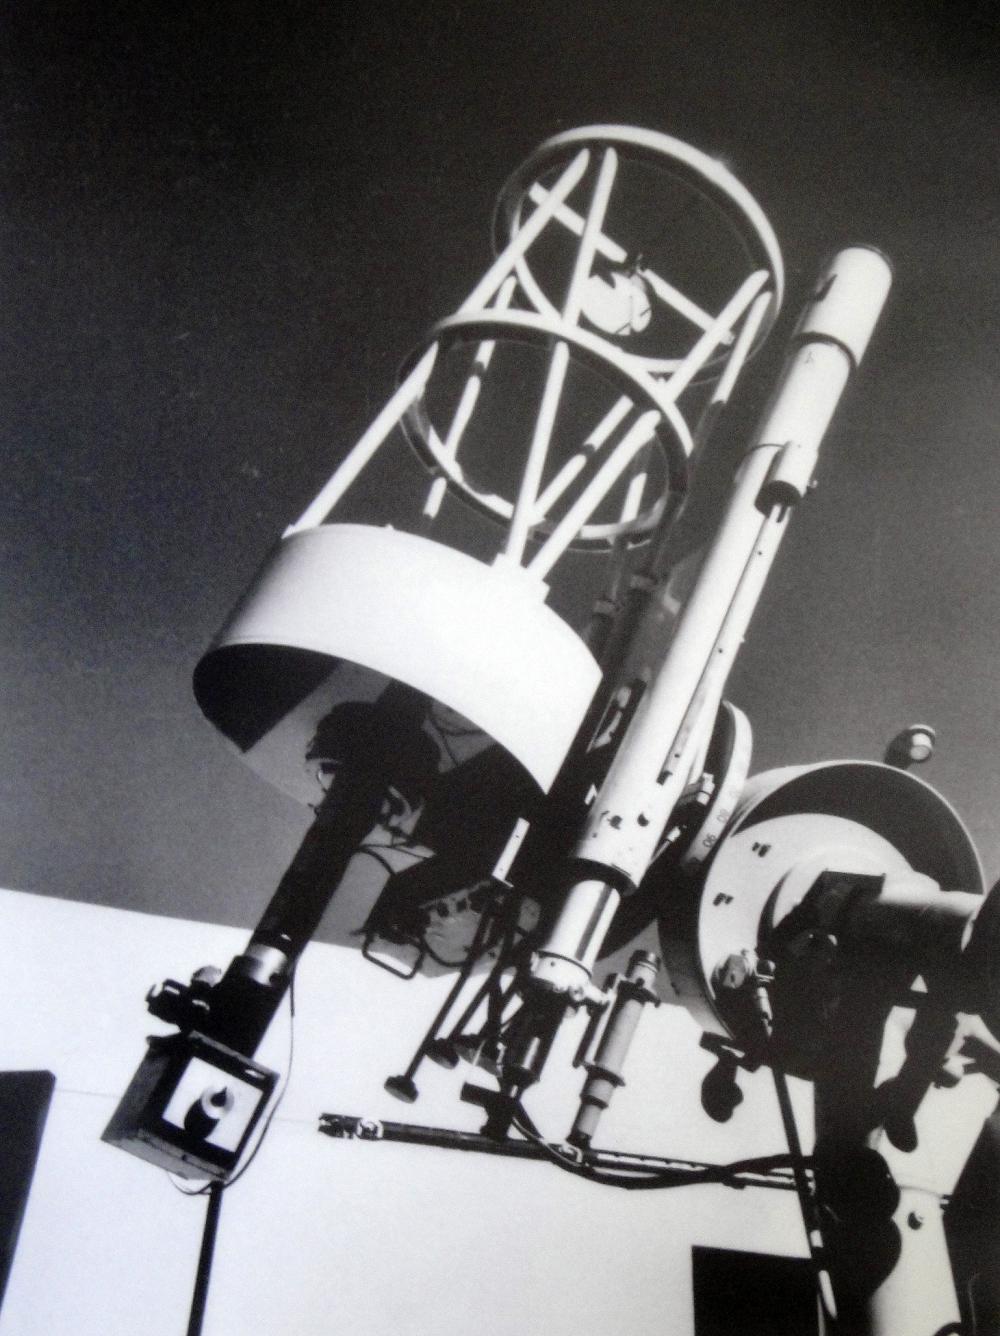 40cm-Reflecting telescope at Boyden station (Image